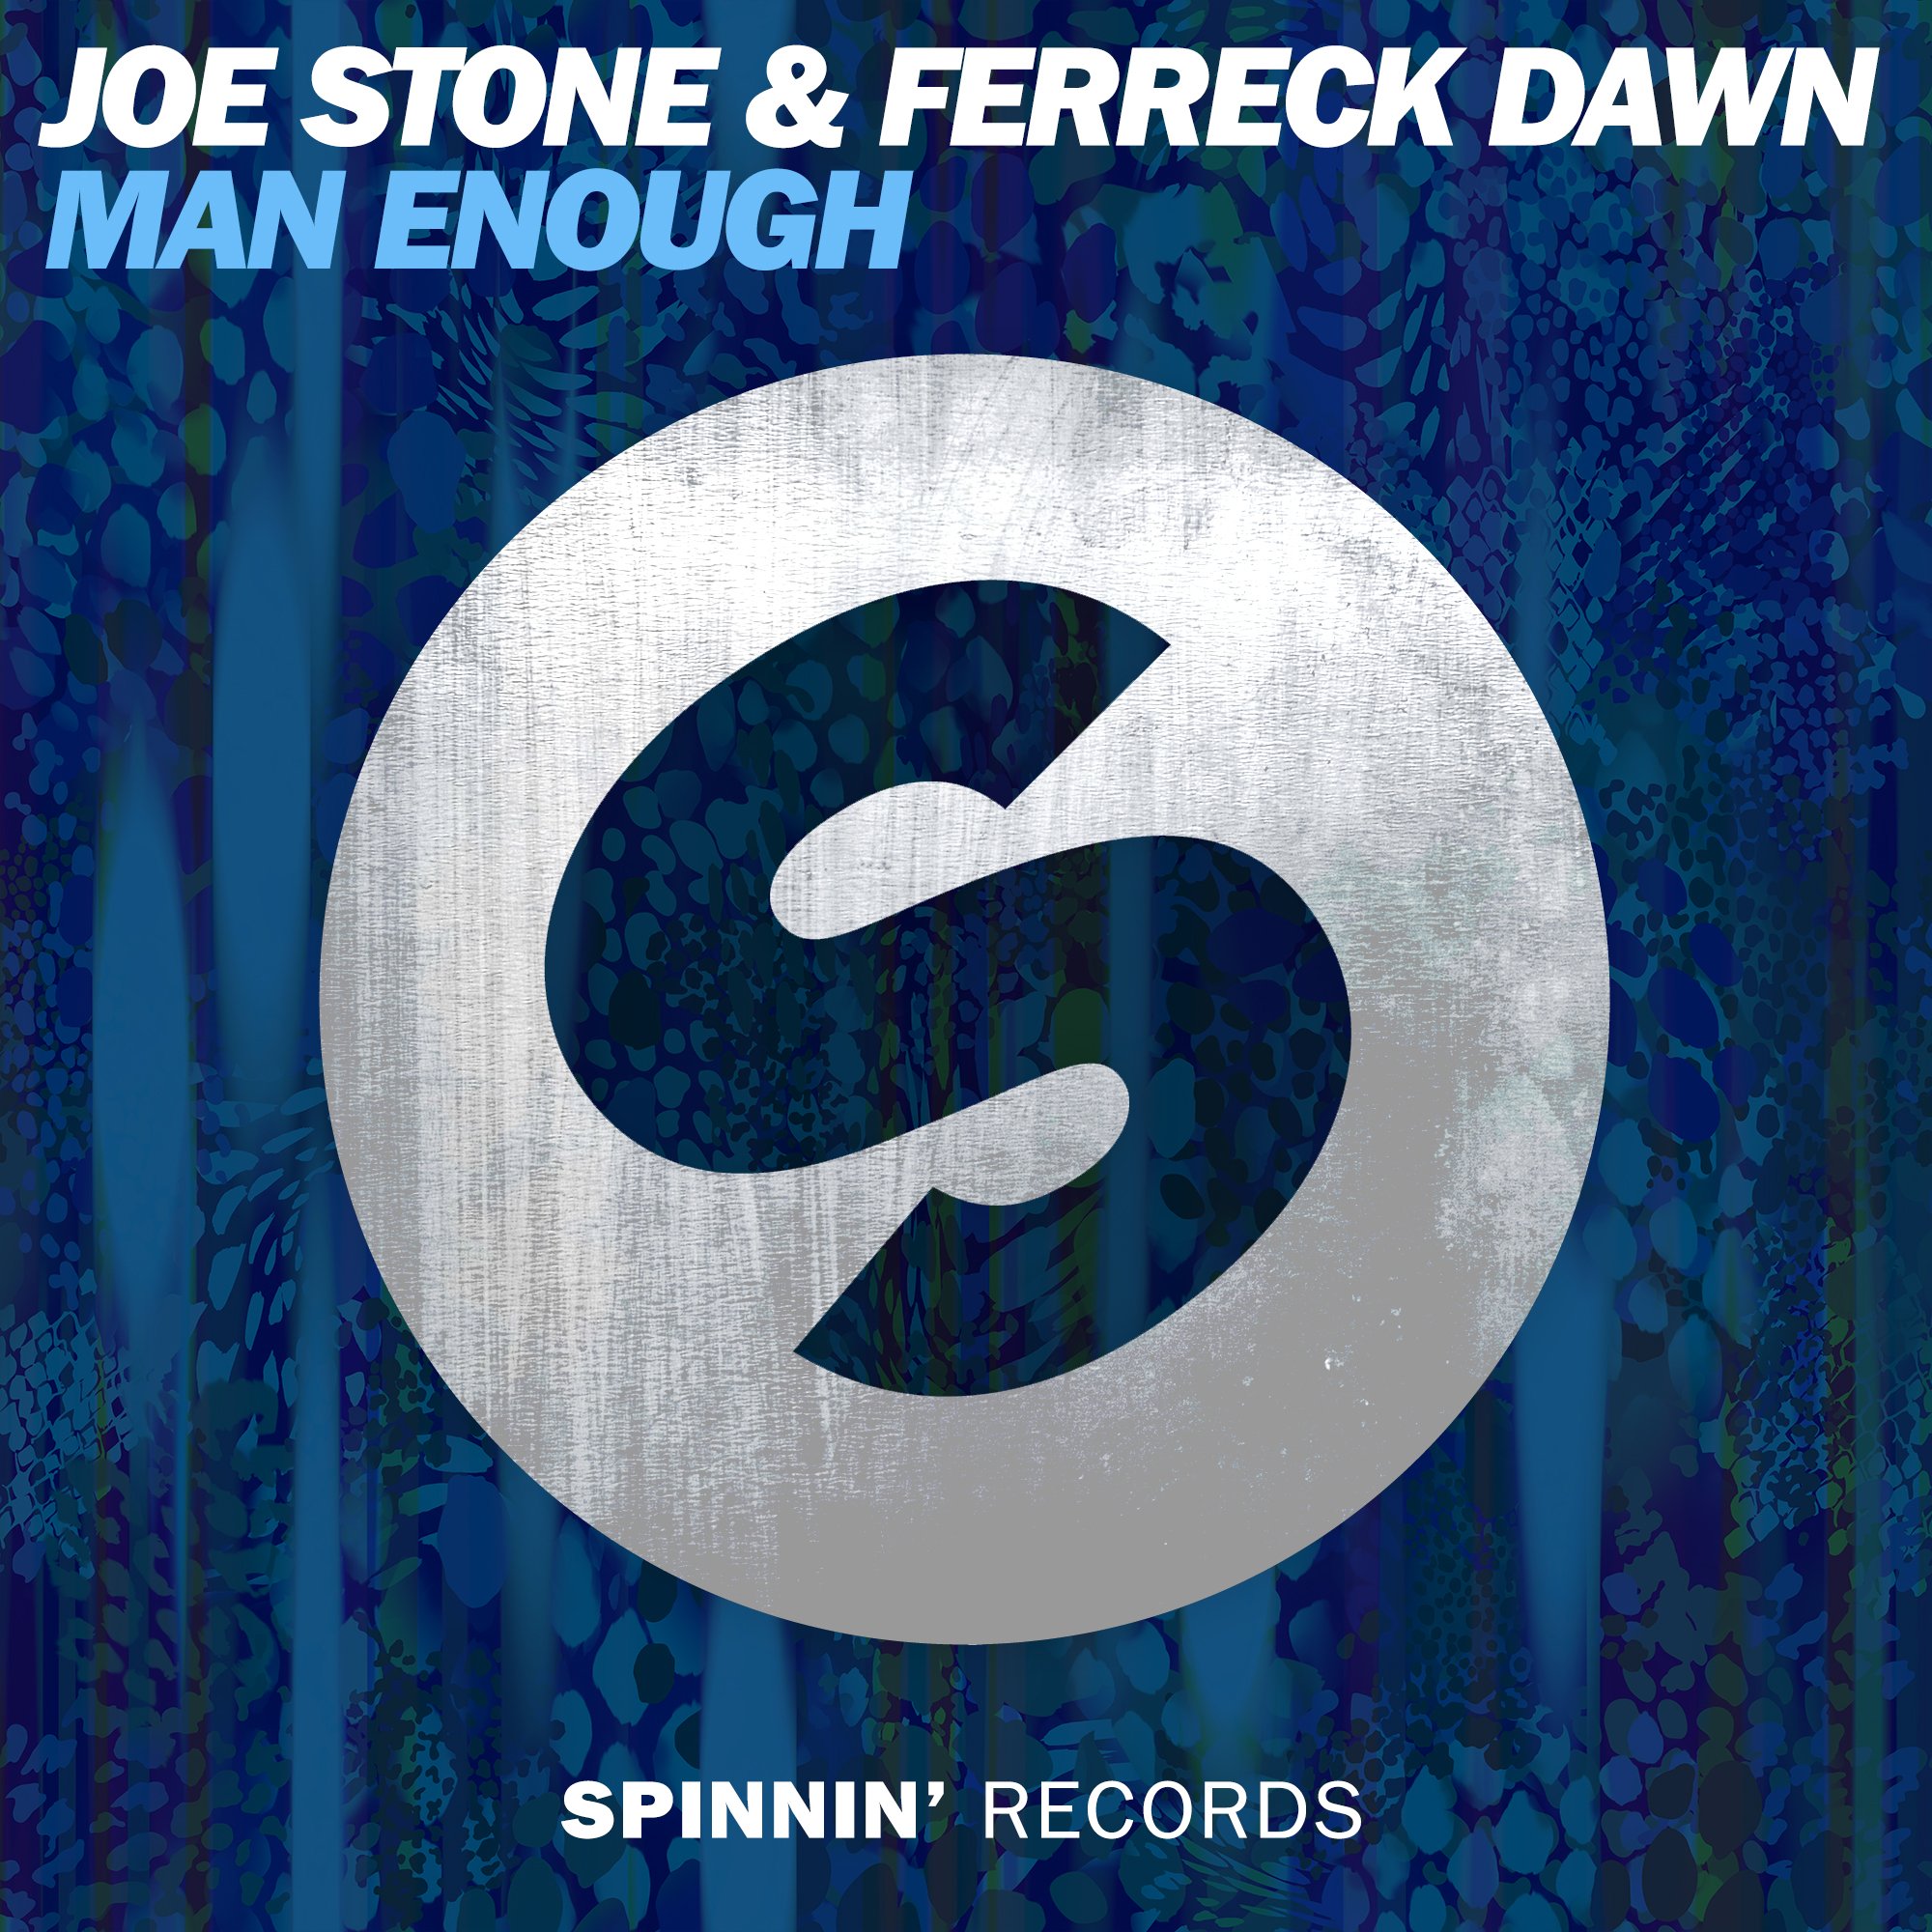 Joe stone. Ferreck Dawn. Spinnin records. Joe Dawning.